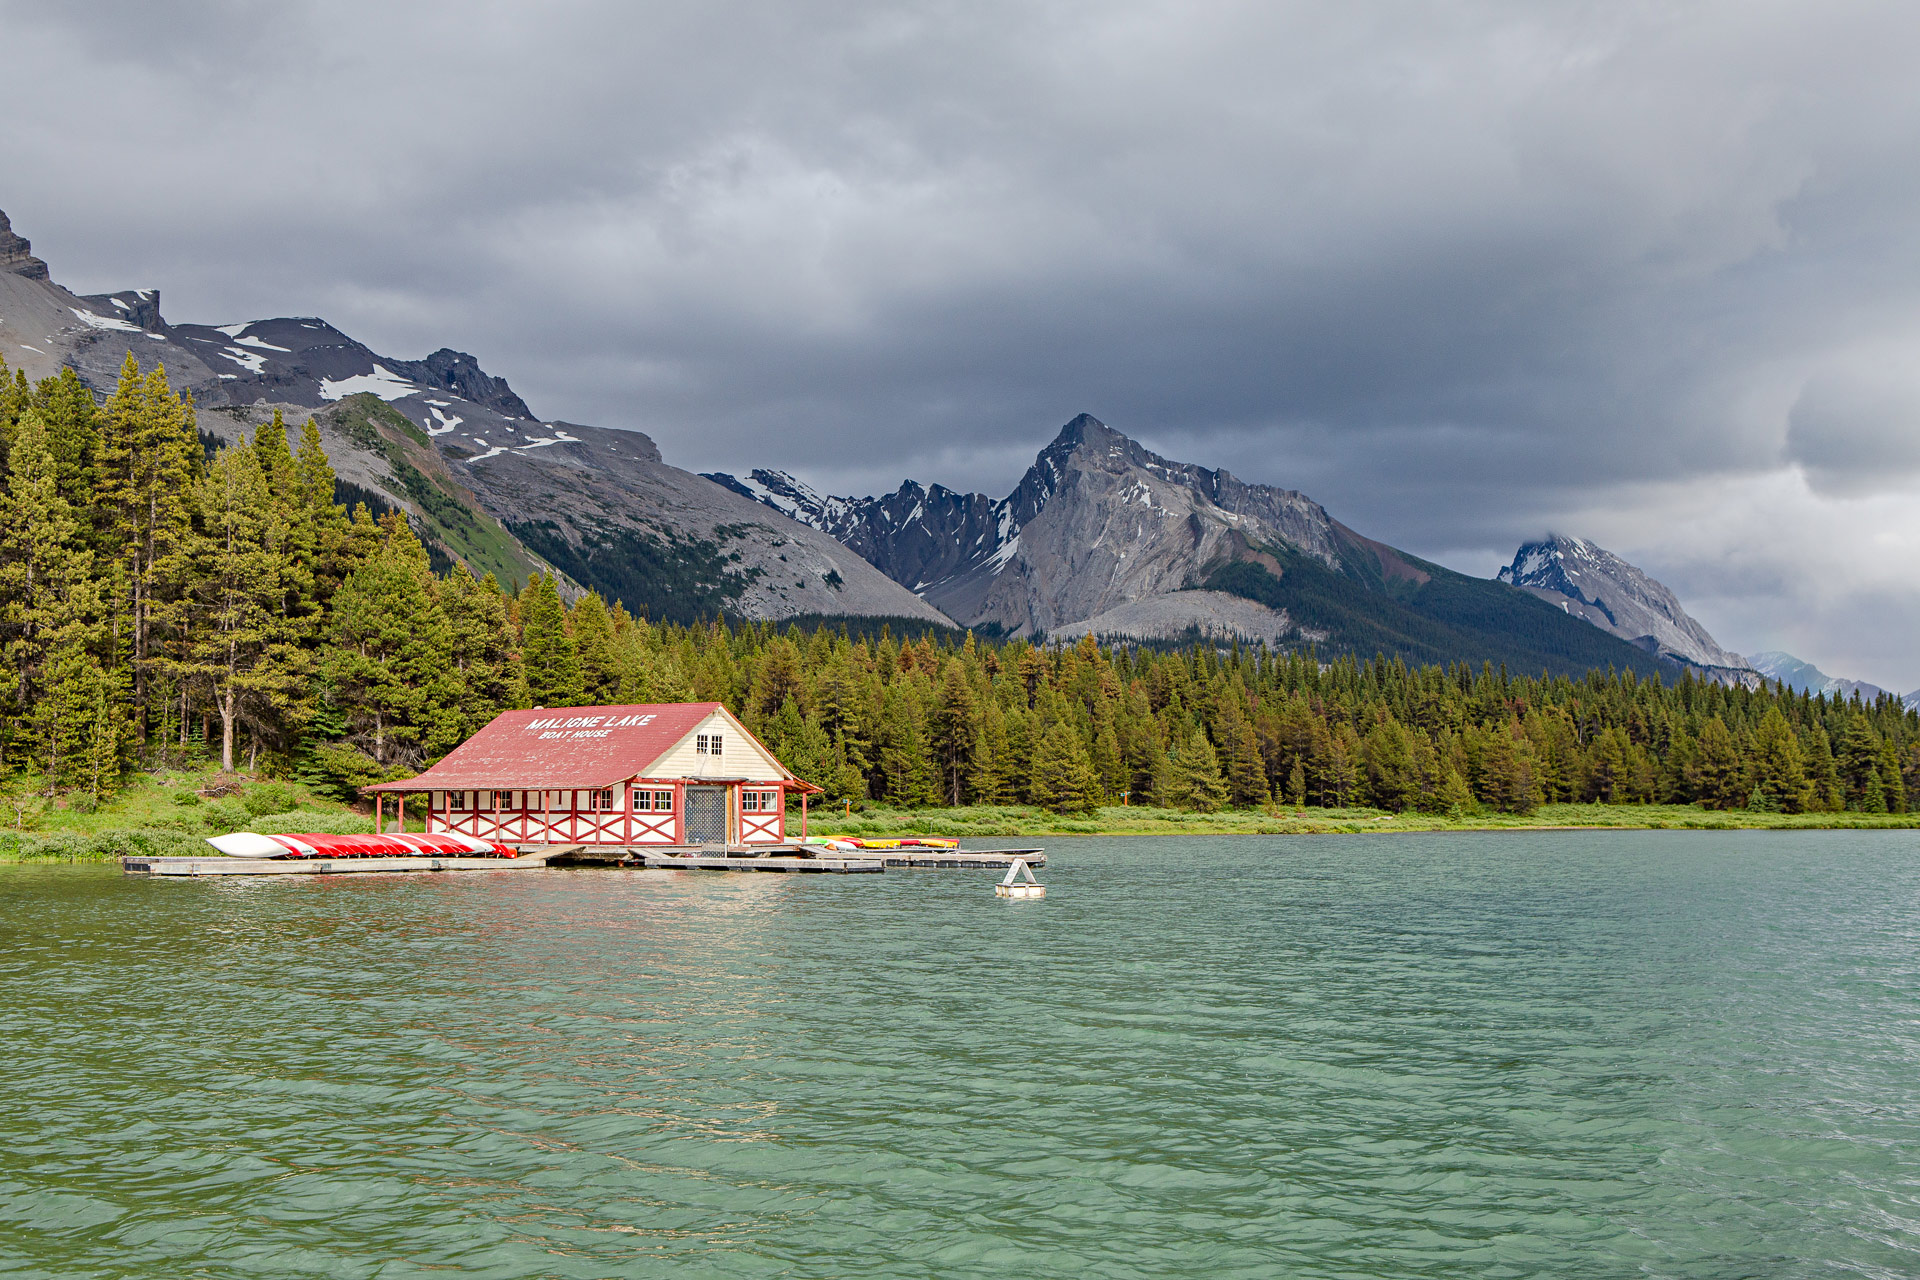 Maligne Lake Jasper Alberta Canada